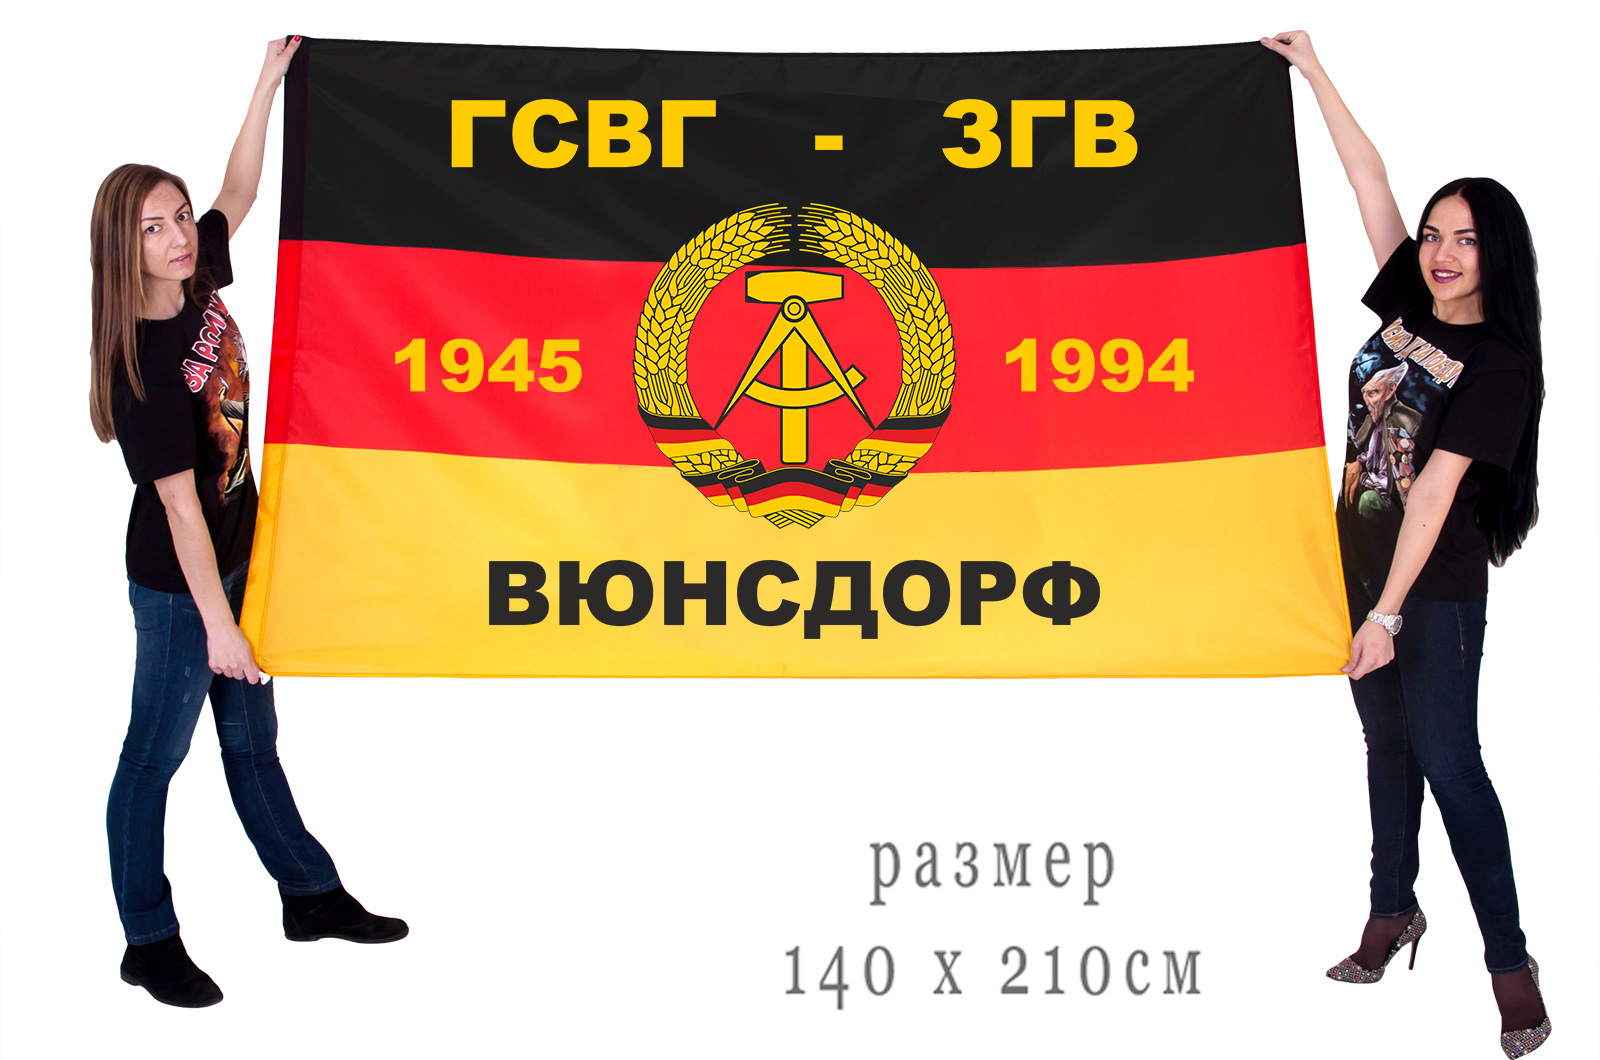 Большой флаг ГСВГ-ЗГВ "Вюнсдорф" 1945-1994